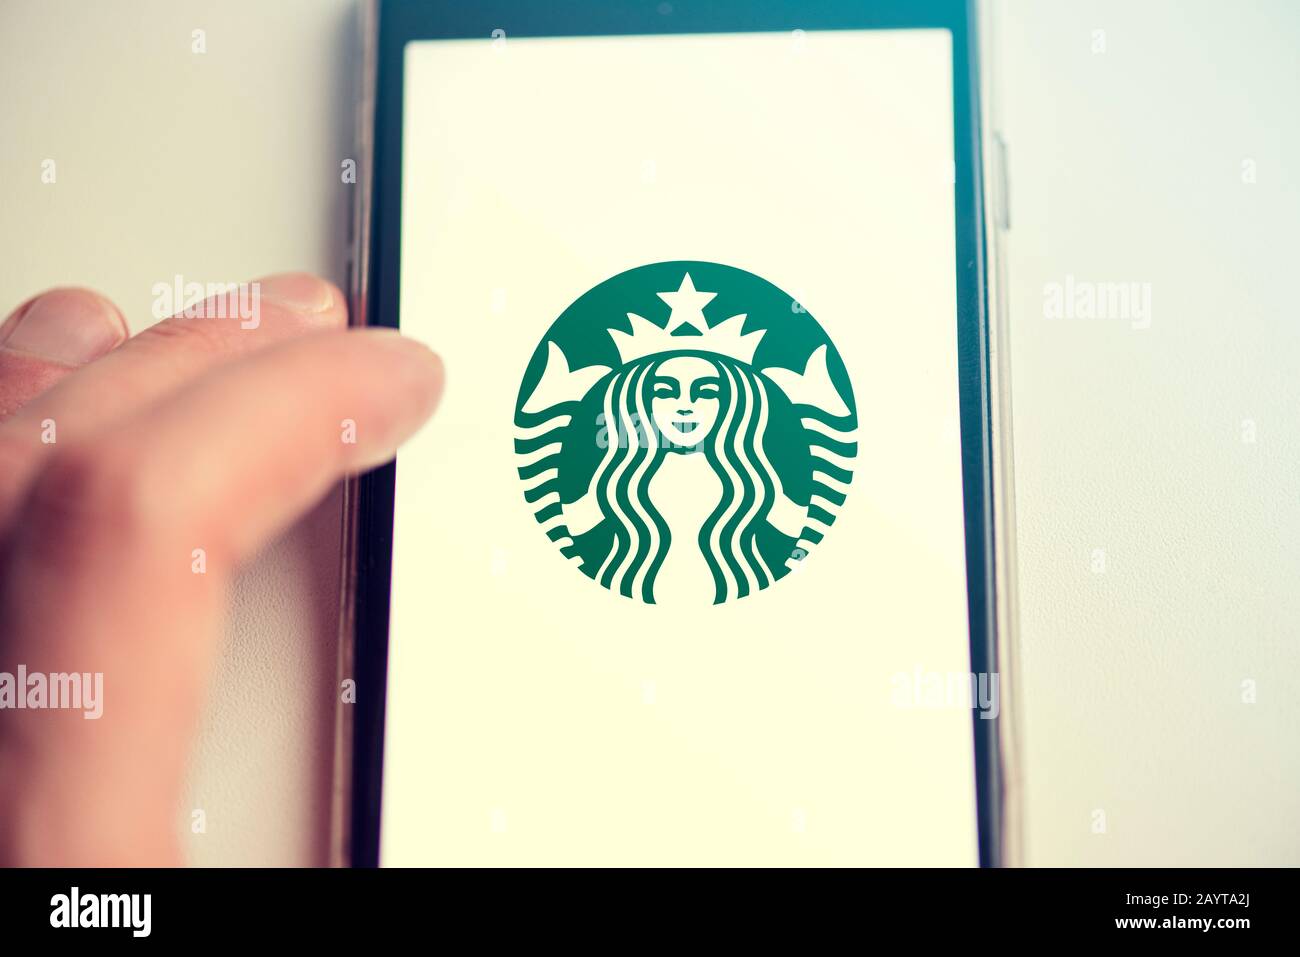 Berlin - 17. FEBRUAR: Neues Starbucks Logo auf Dem Bildschirm des Mobiltelefons in Berlin am 17. Februar. 2020 in Deutschland. Getontes Bild. Stockfoto